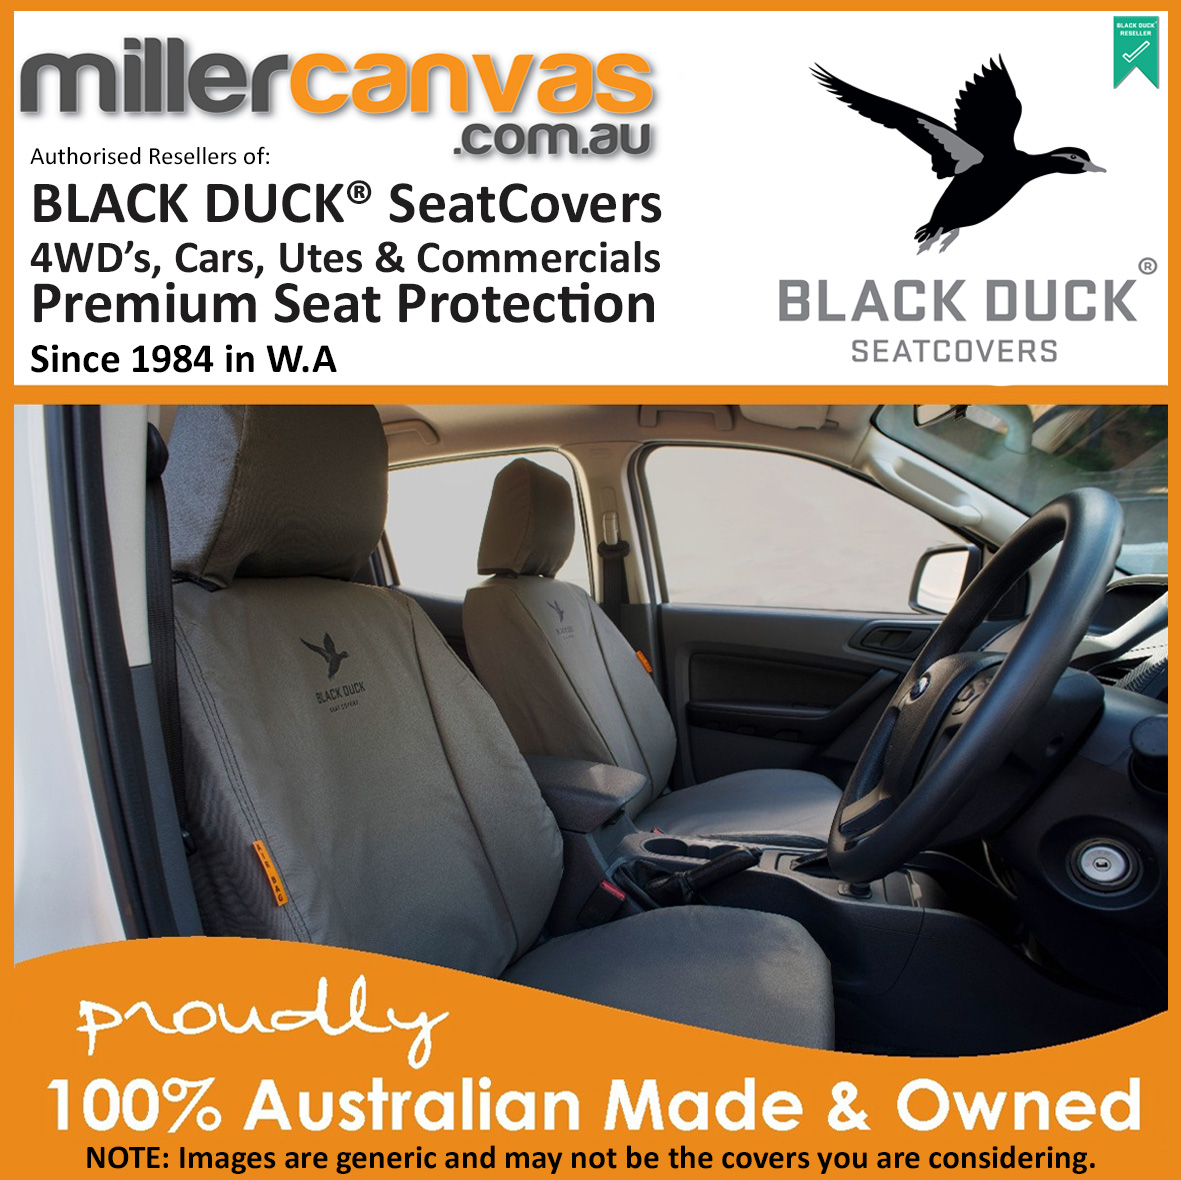 Black Duck Seatcovers Triton Mq Mr Exceed Gsr Gls Premium